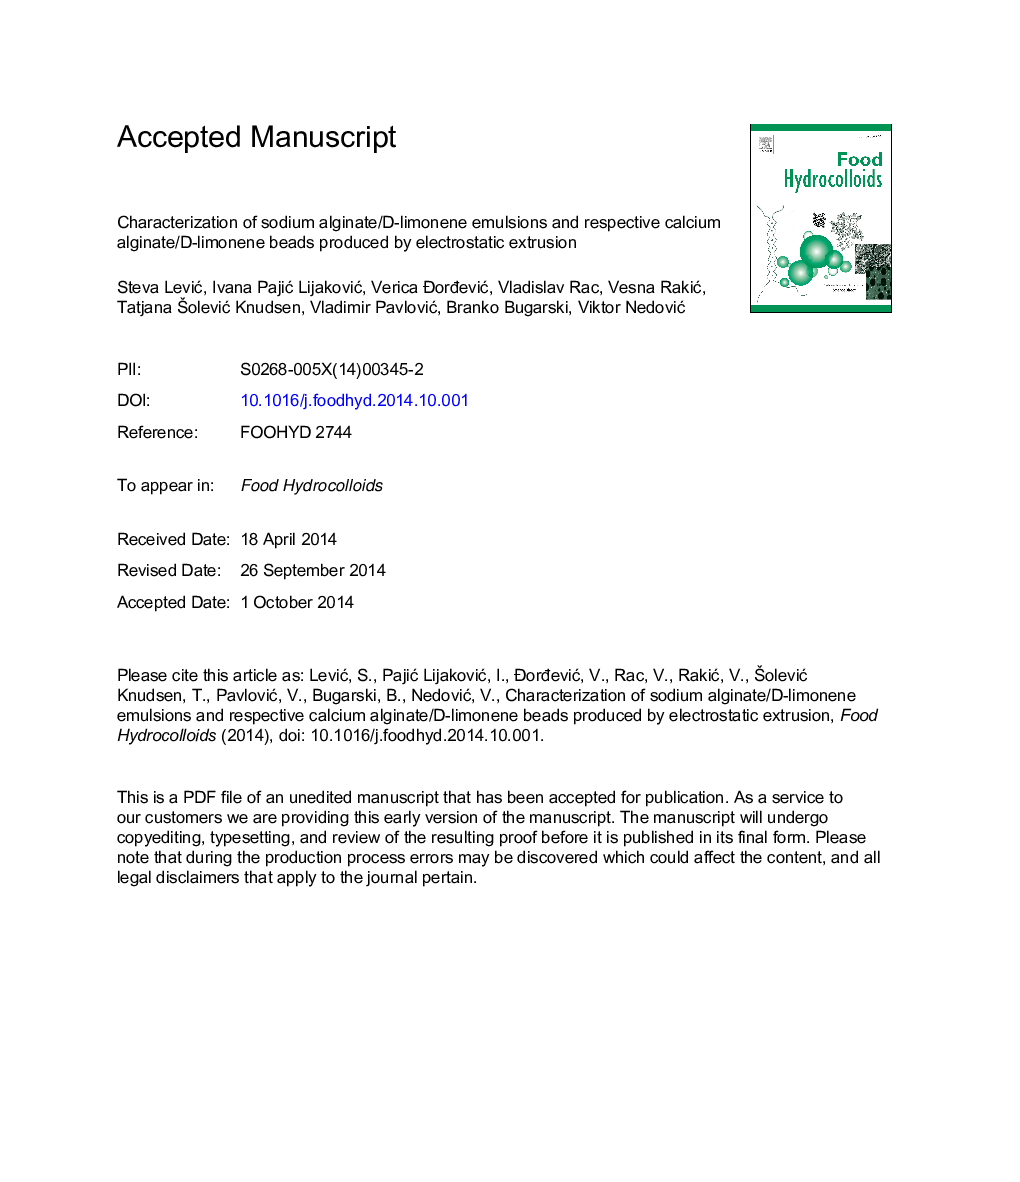 Characterization of sodium alginate/d-limonene emulsions and respective calcium alginate/d-limonene beads produced by electrostatic extrusion